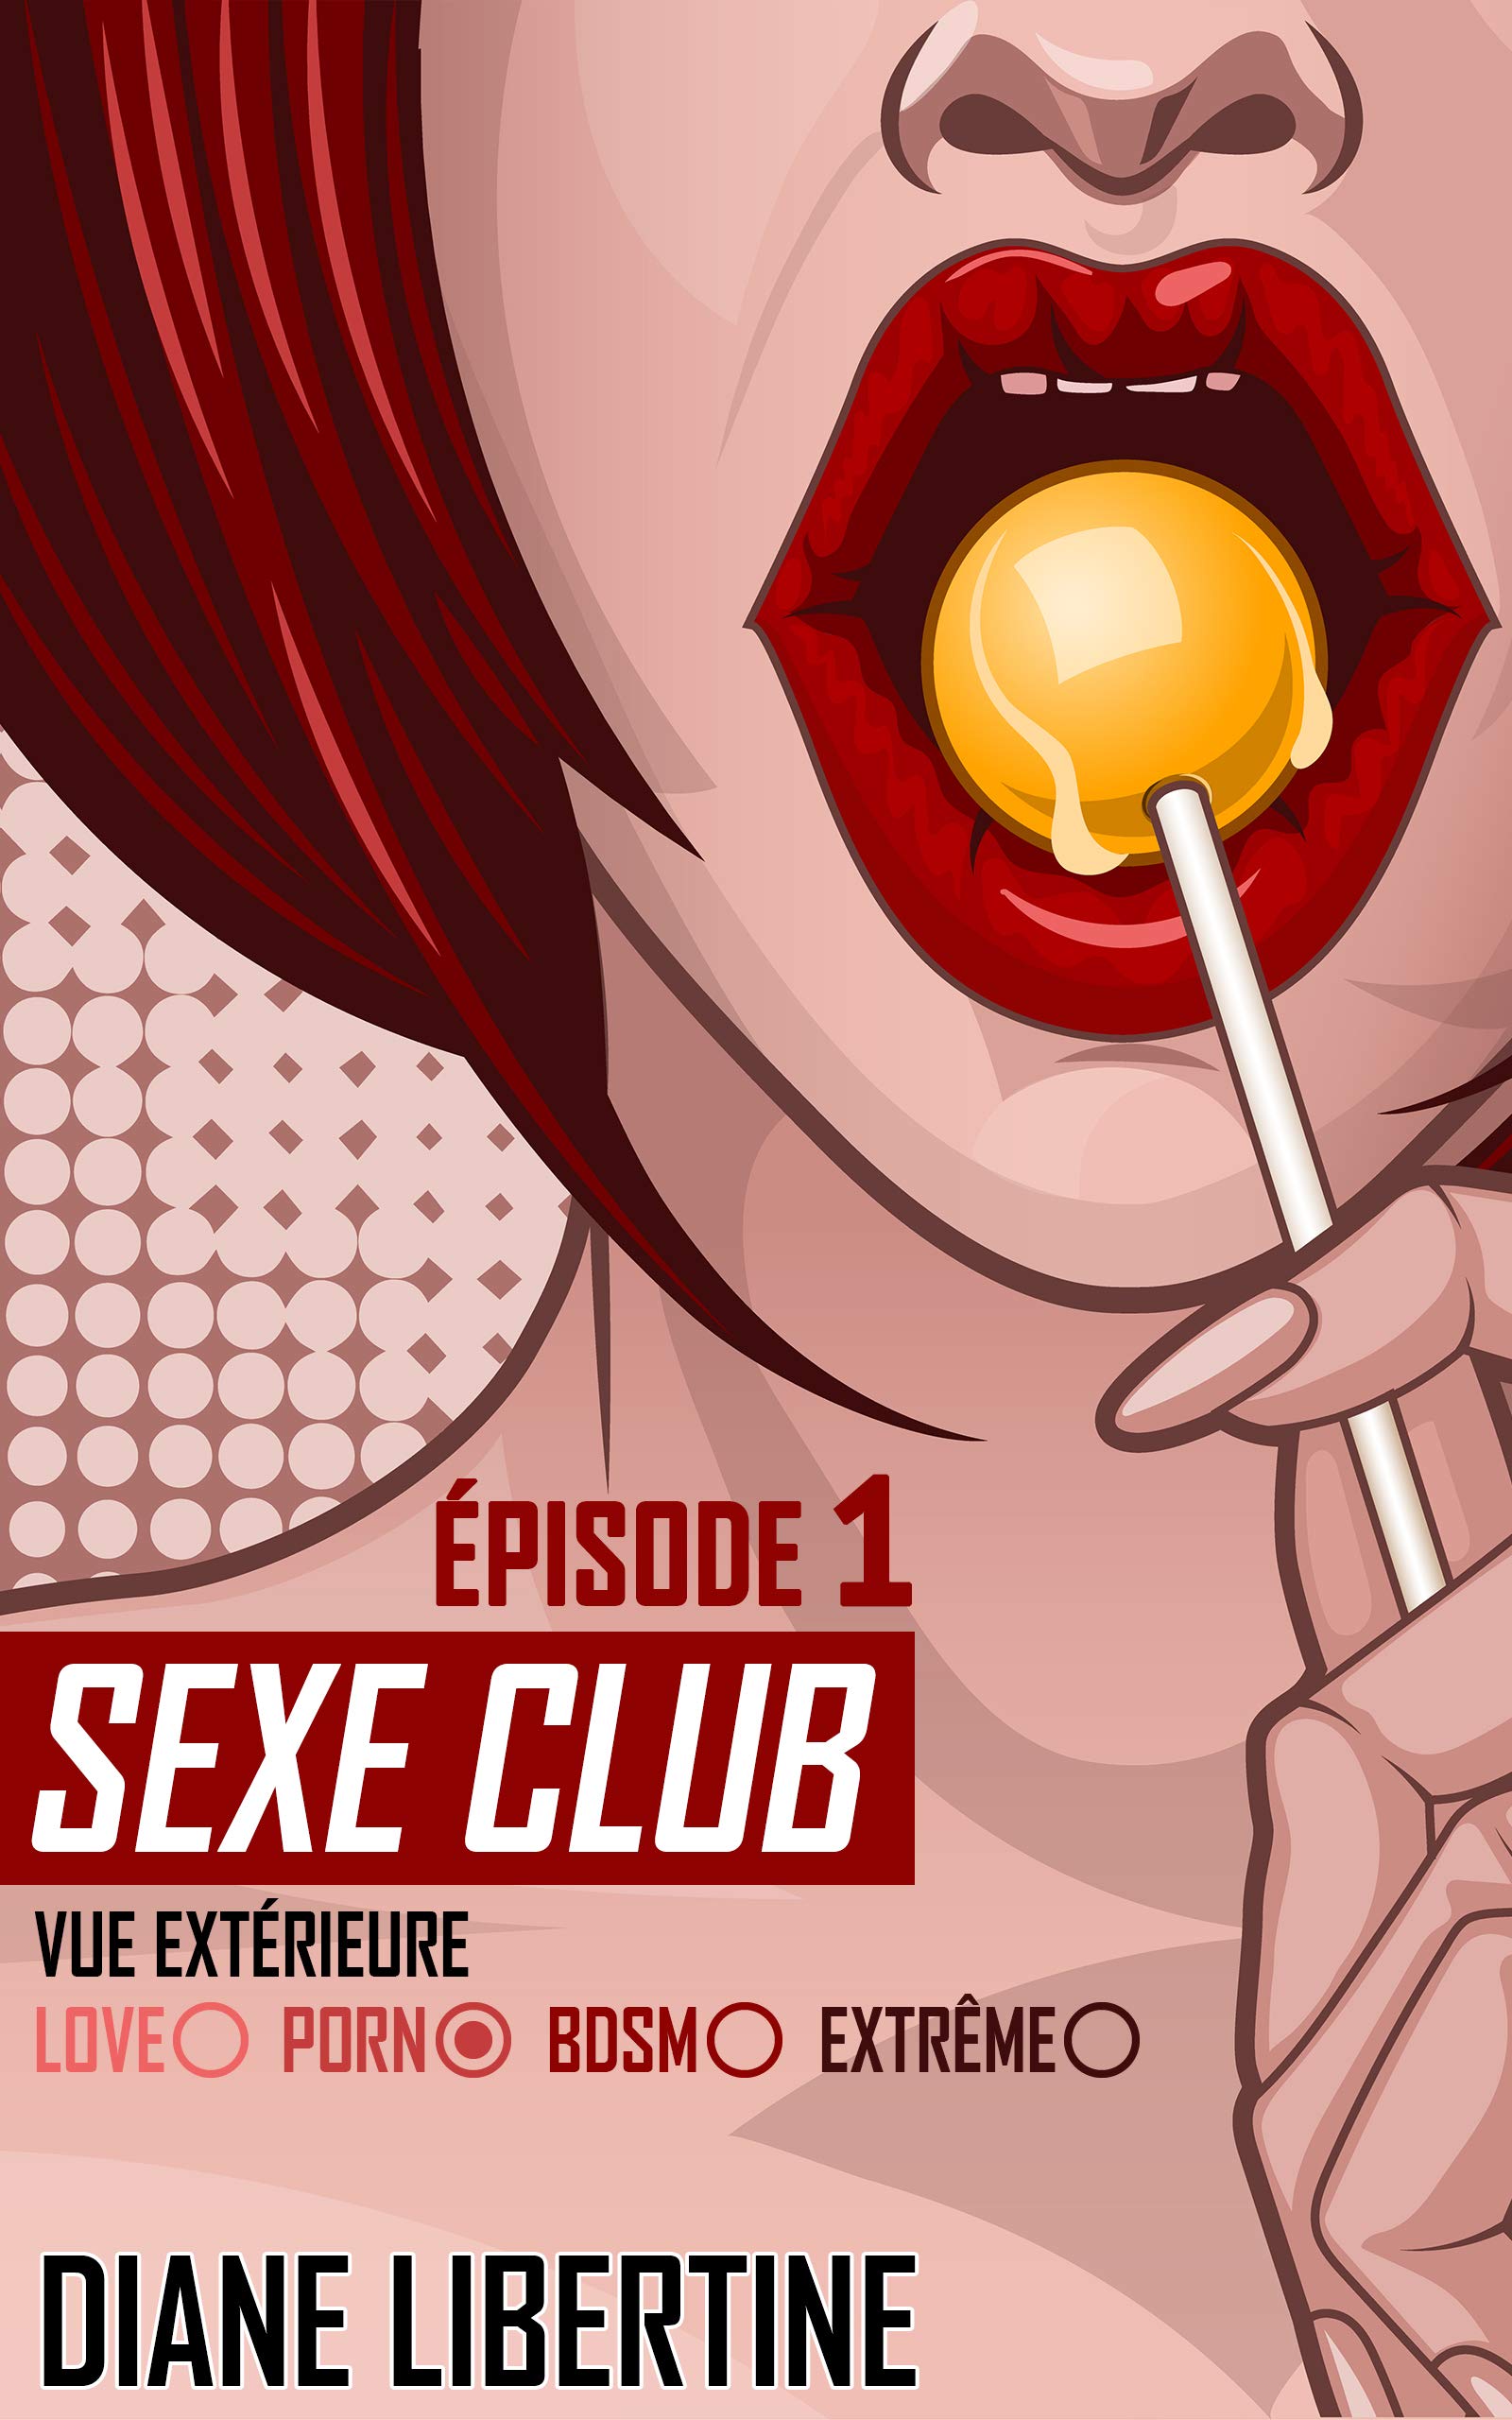 histoires de sexe club